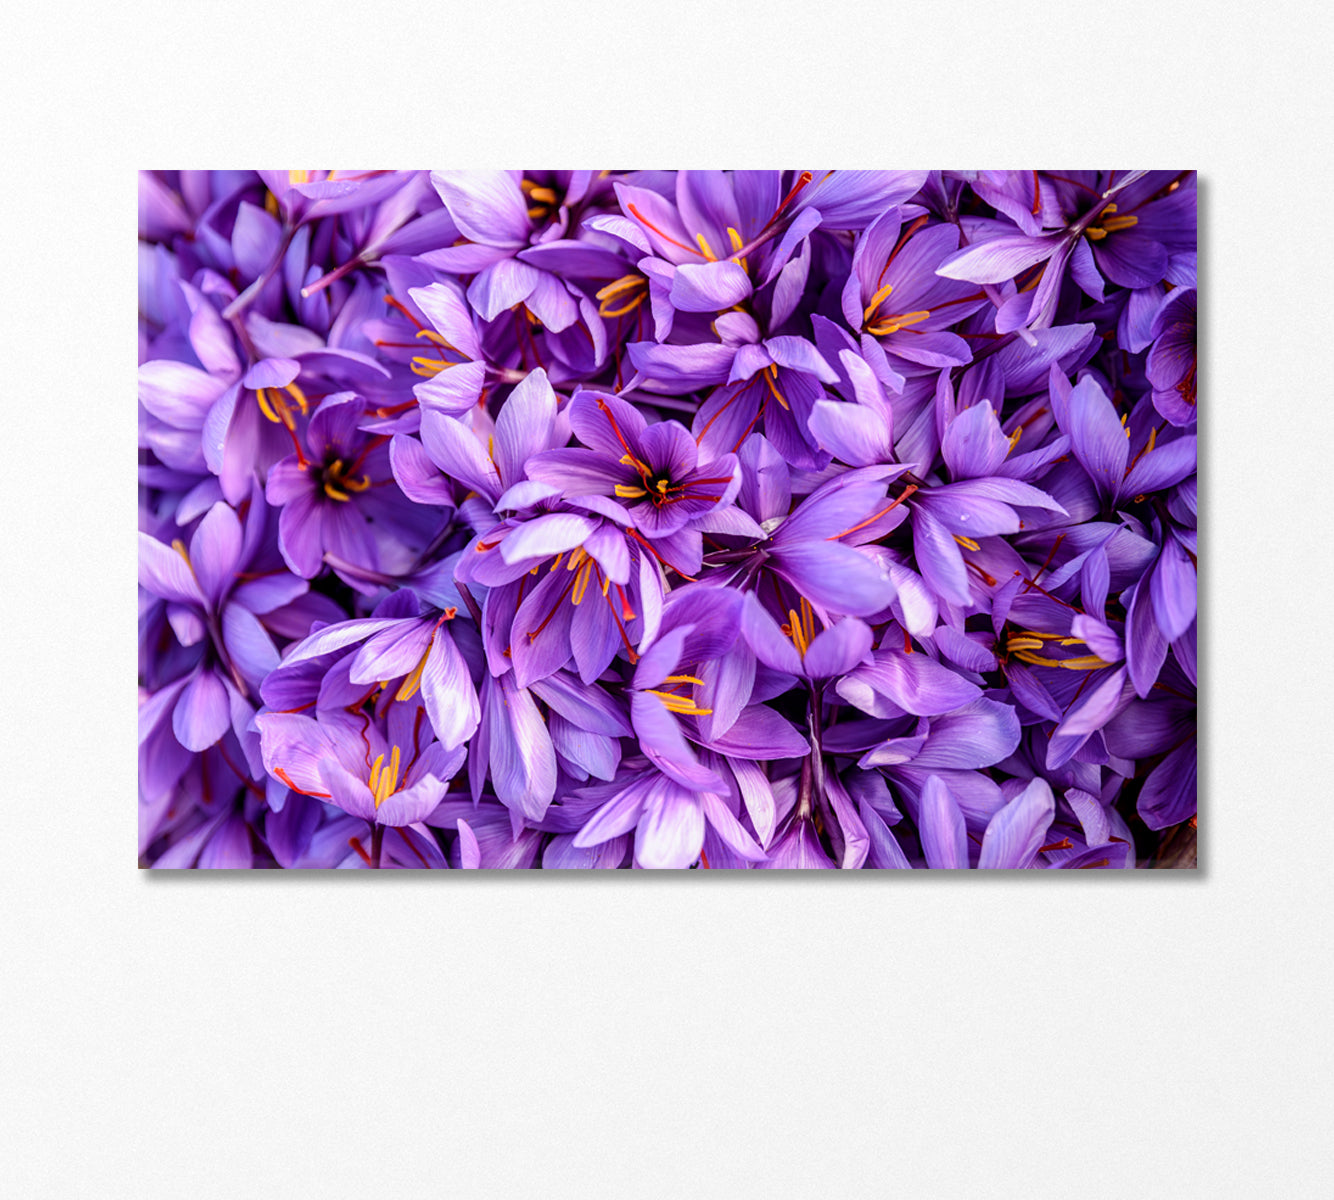 Blooming Saffron Flowers Canvas Print-Canvas Print-CetArt-1 Panel-24x16 inches-CetArt